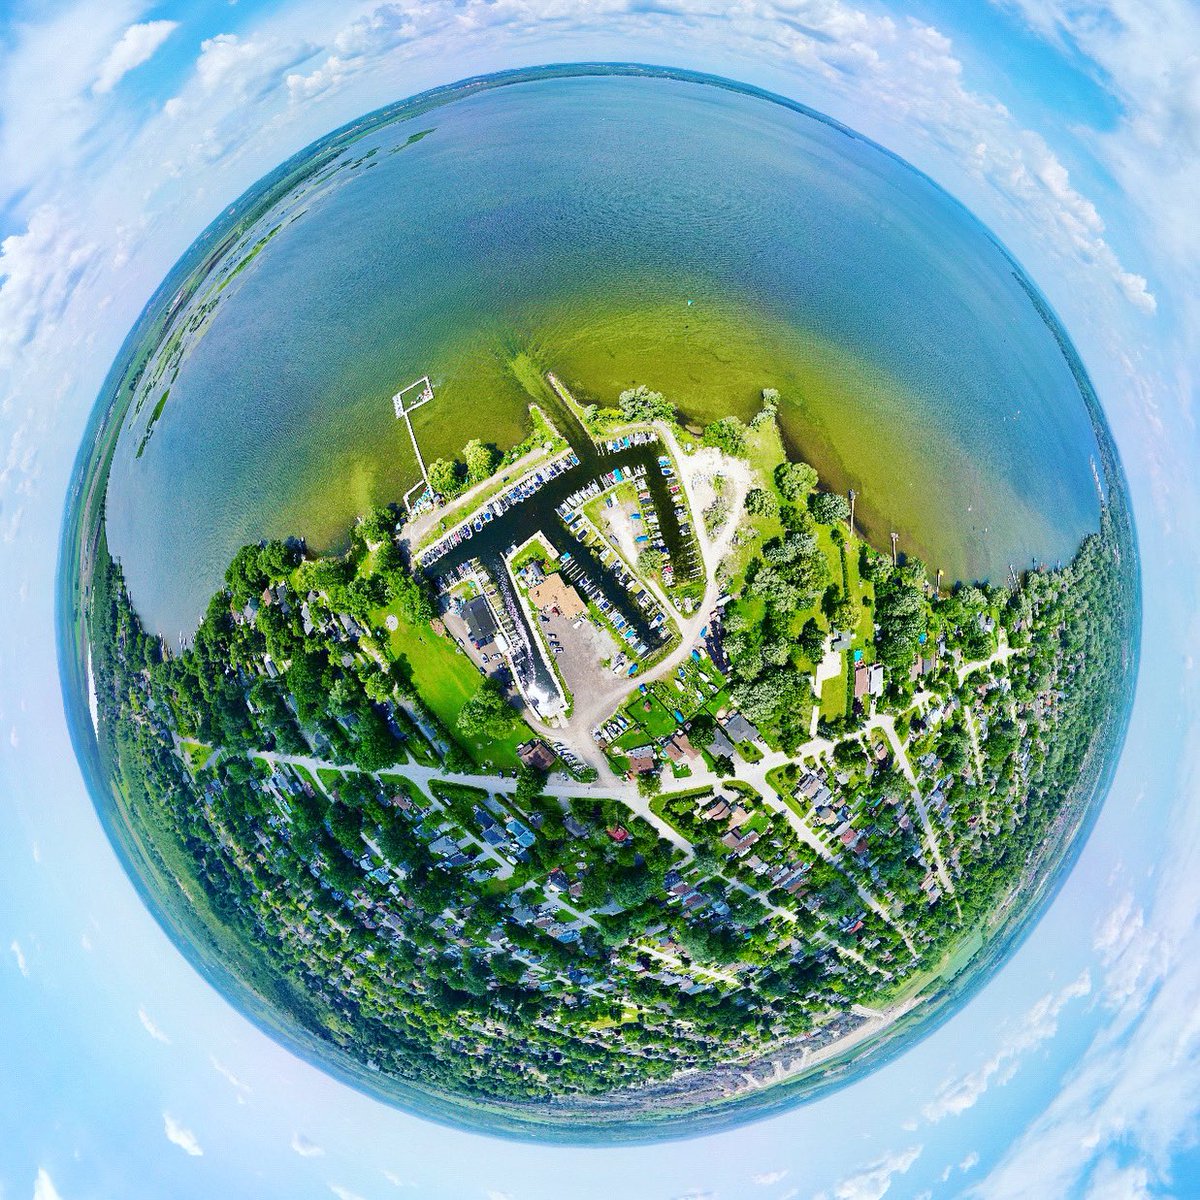 Cook’s Bay #drone #uav #uas #rpas #dji #mini3pro #flyminicreatebig #marina #bay #cooksbay #lake #lakesimcoe #water #summer #midday #aerialphotography #sphere #pano #shotondji #keswick #ontario #canada #dronestagram #dronedesire #twenty4sevendrones #gameofdrones